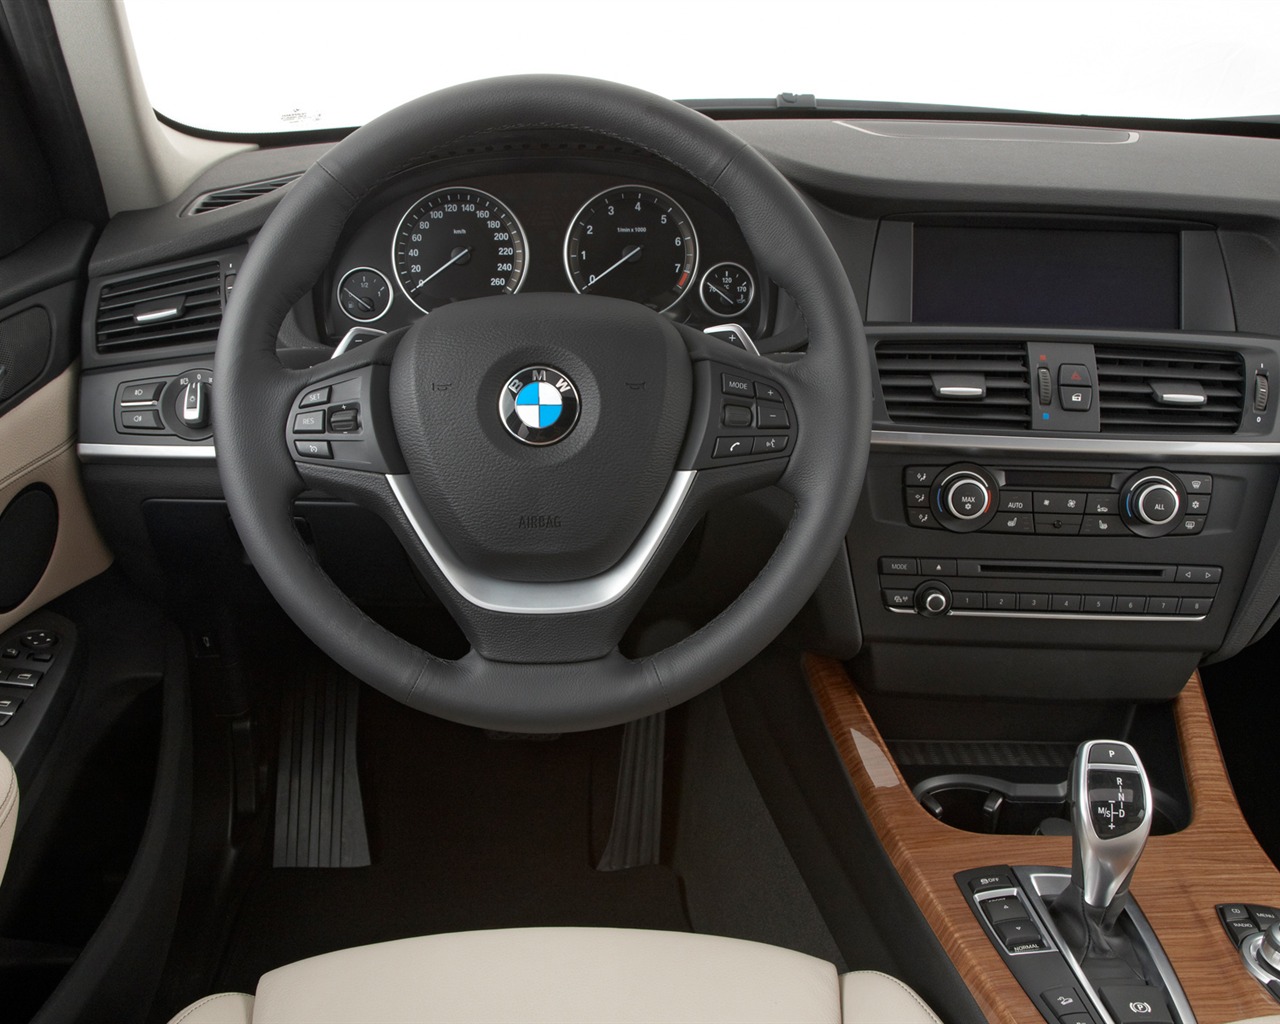 BMW X3 xDrive35i - 2010 宝马(一)40 - 1280x1024